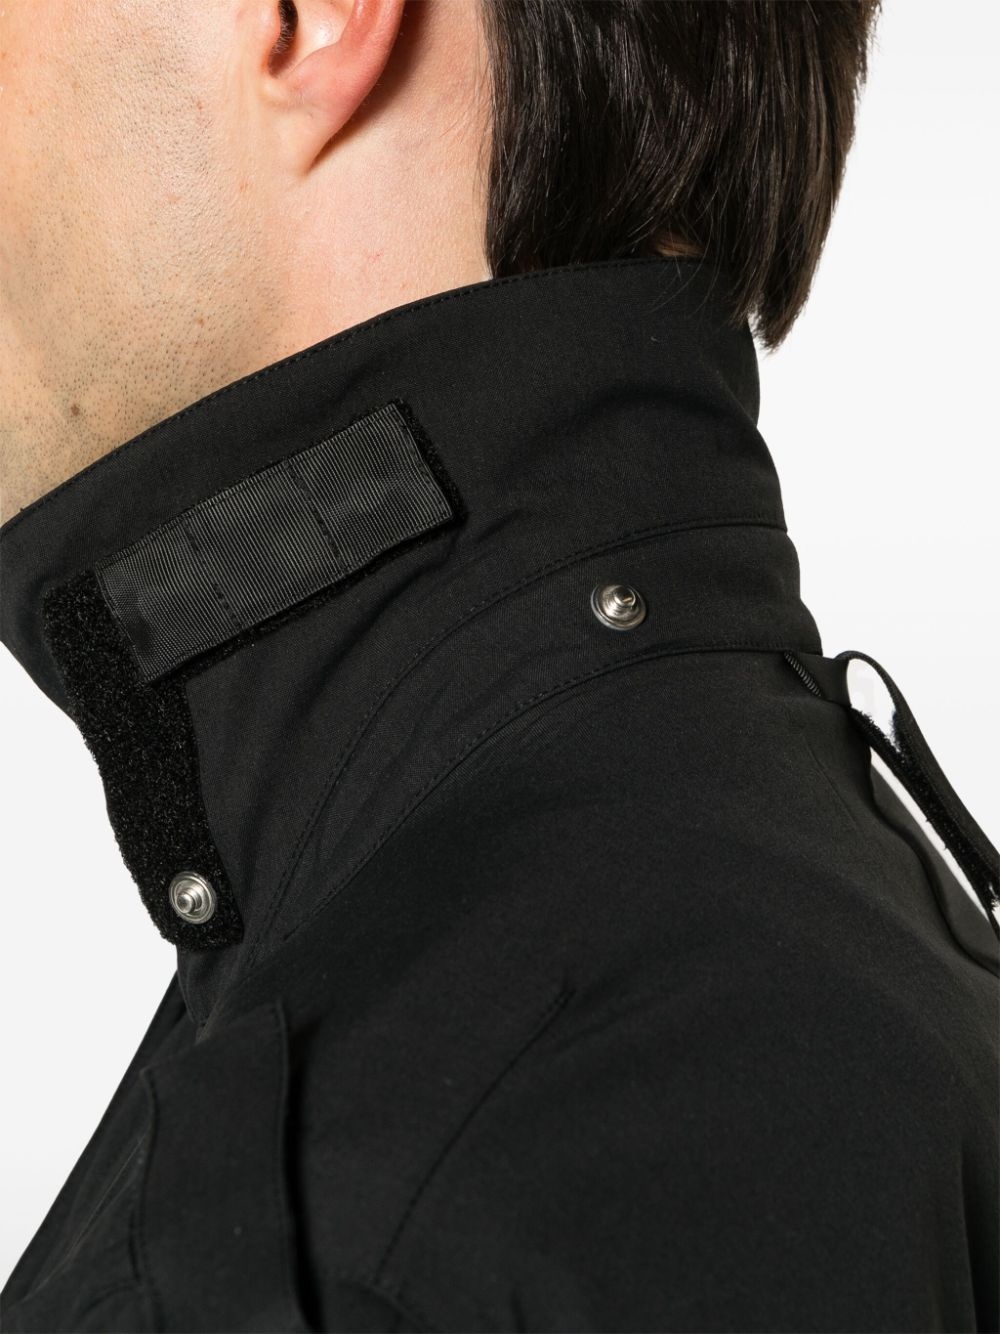 Encapsulated Interops hooded jacket - 6